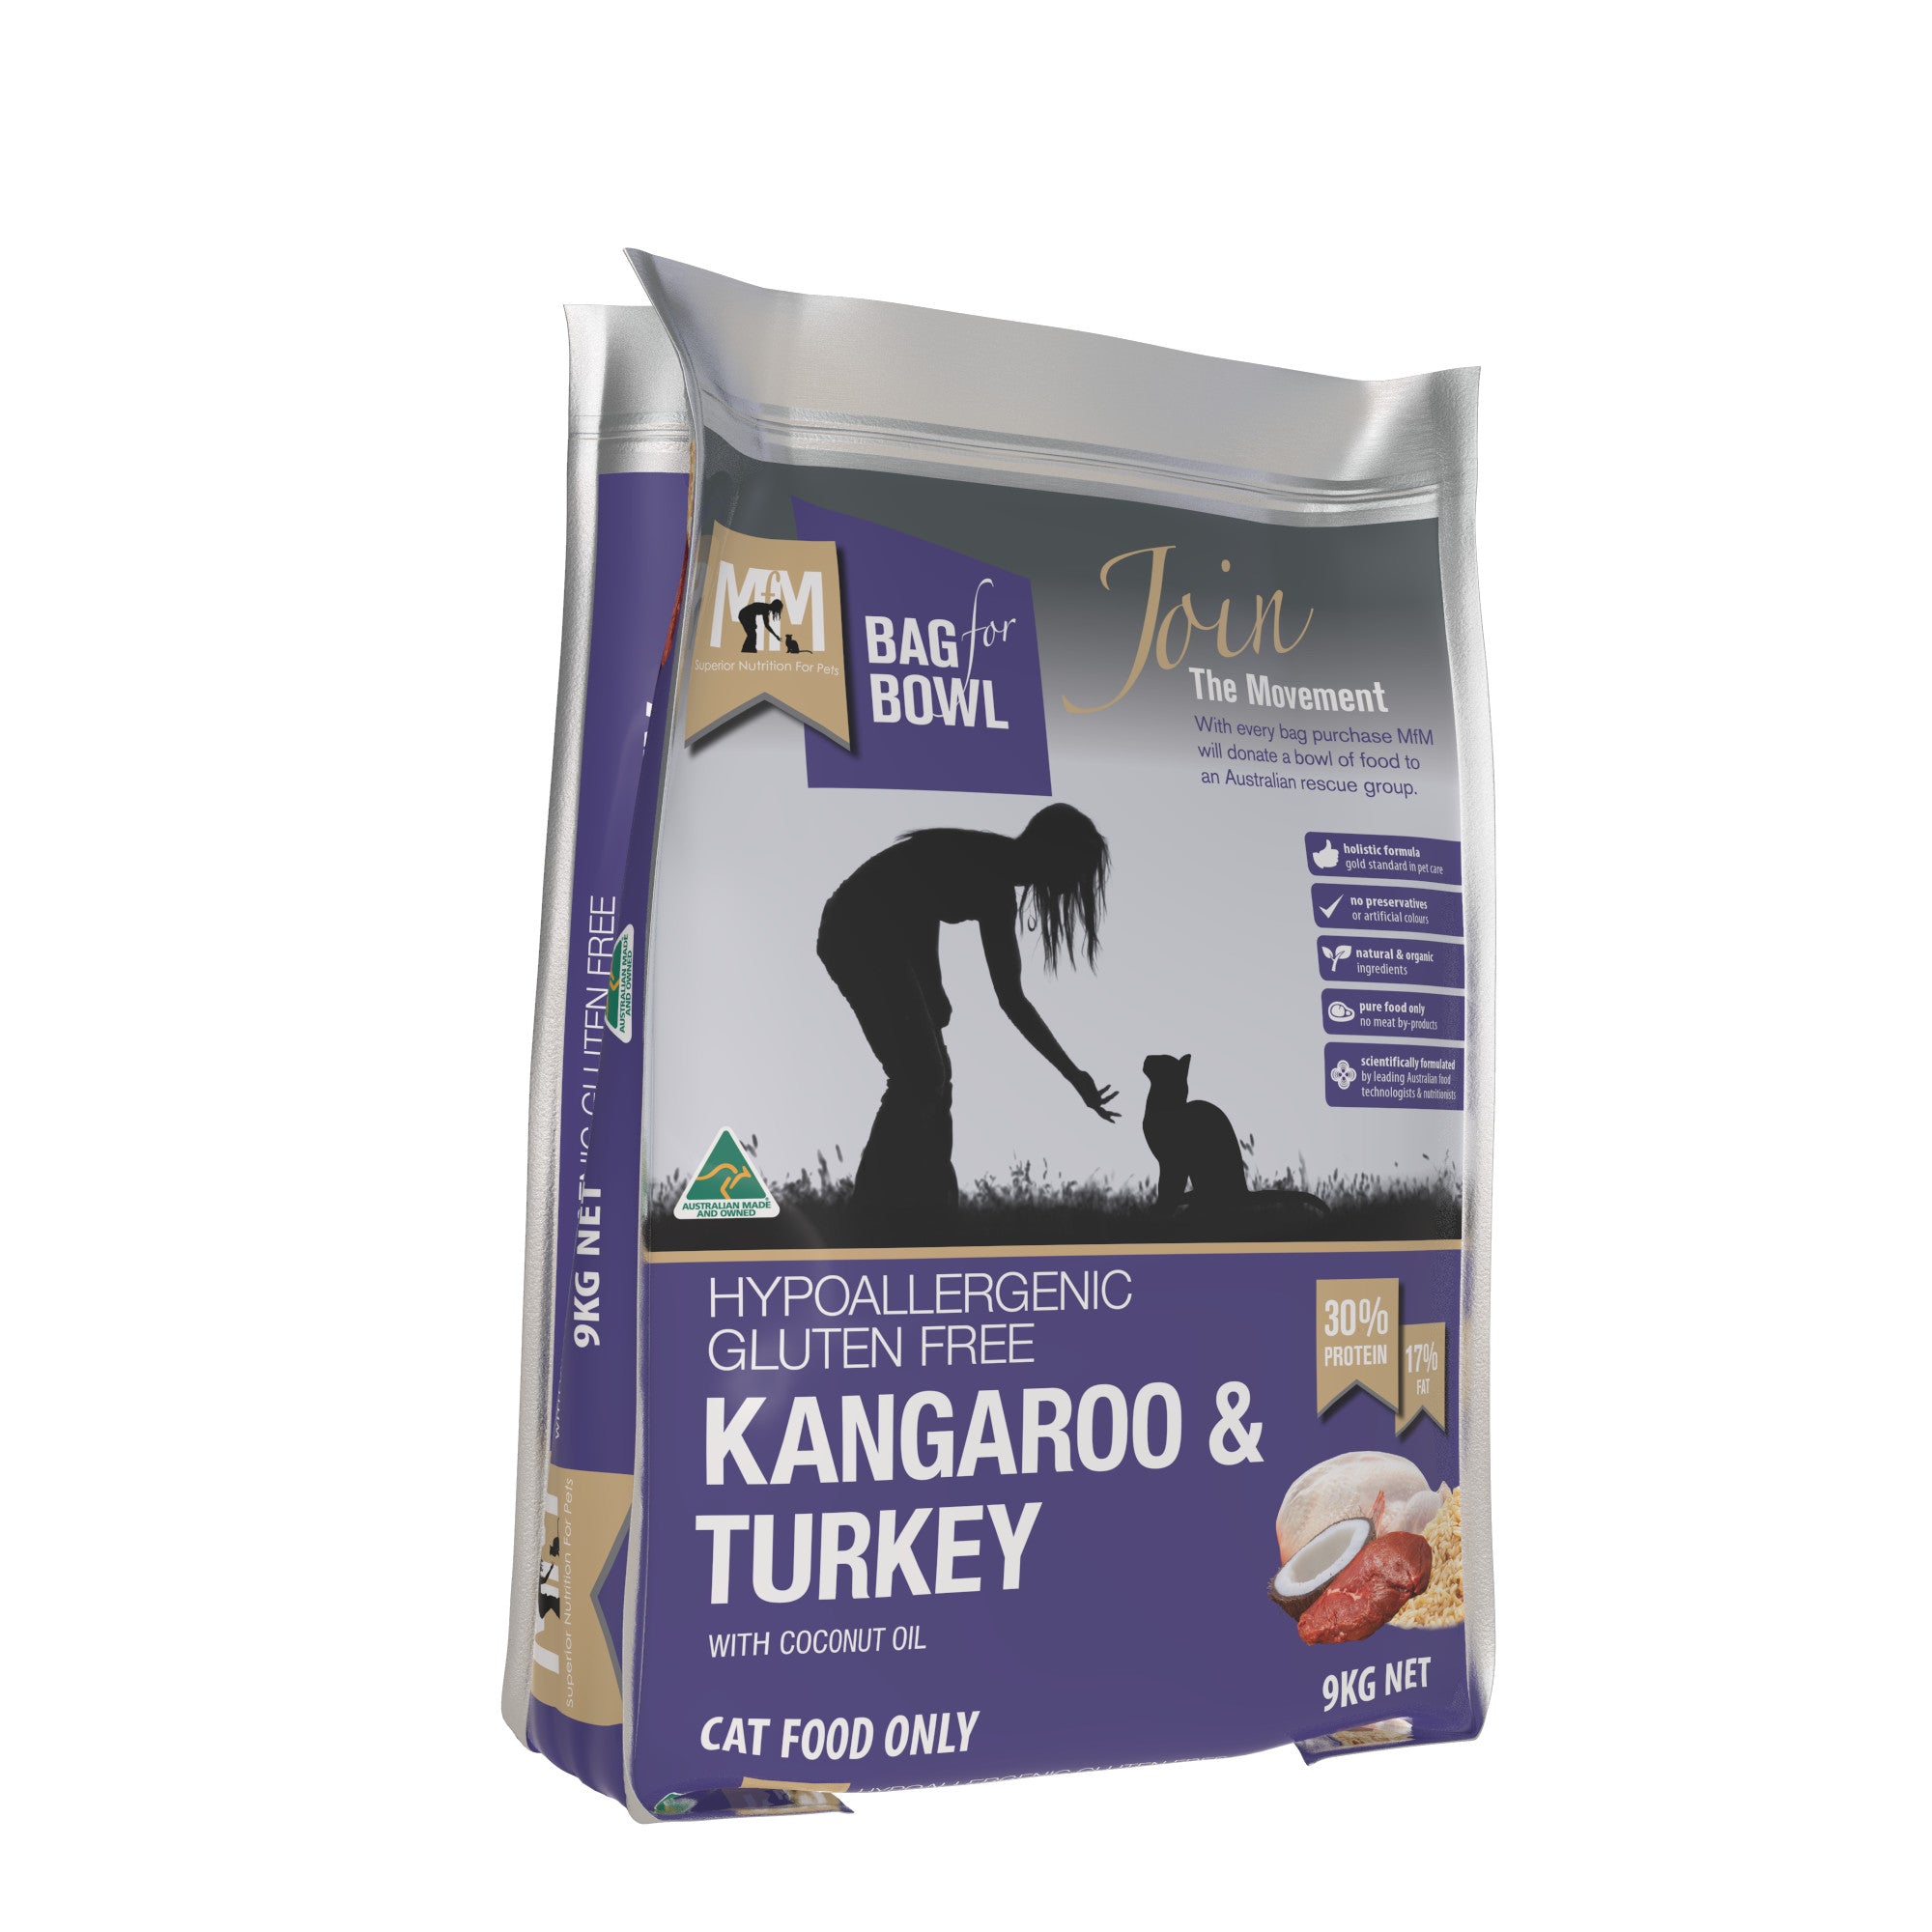 Meals for Meows Kangaroo & Turkey Dry Cat Food 9kg.